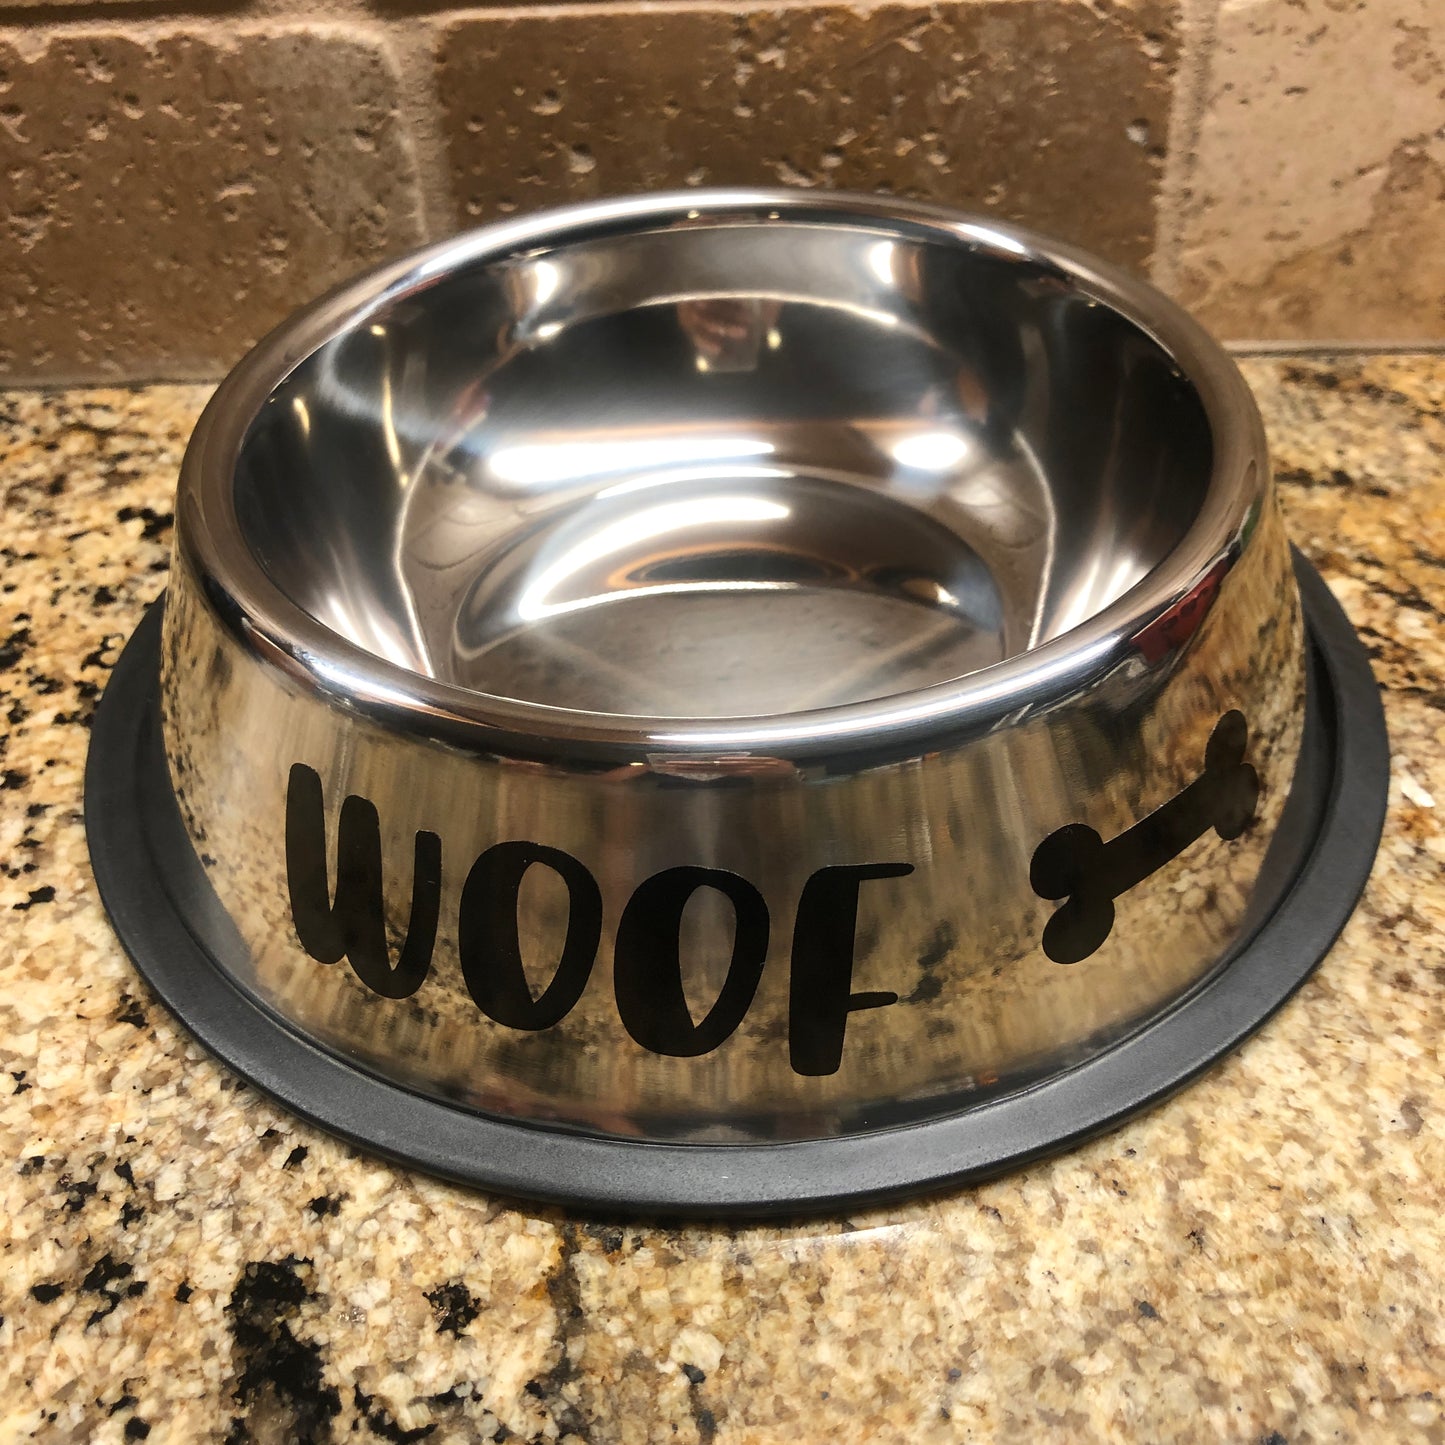 Dog dish with woof and dog bone